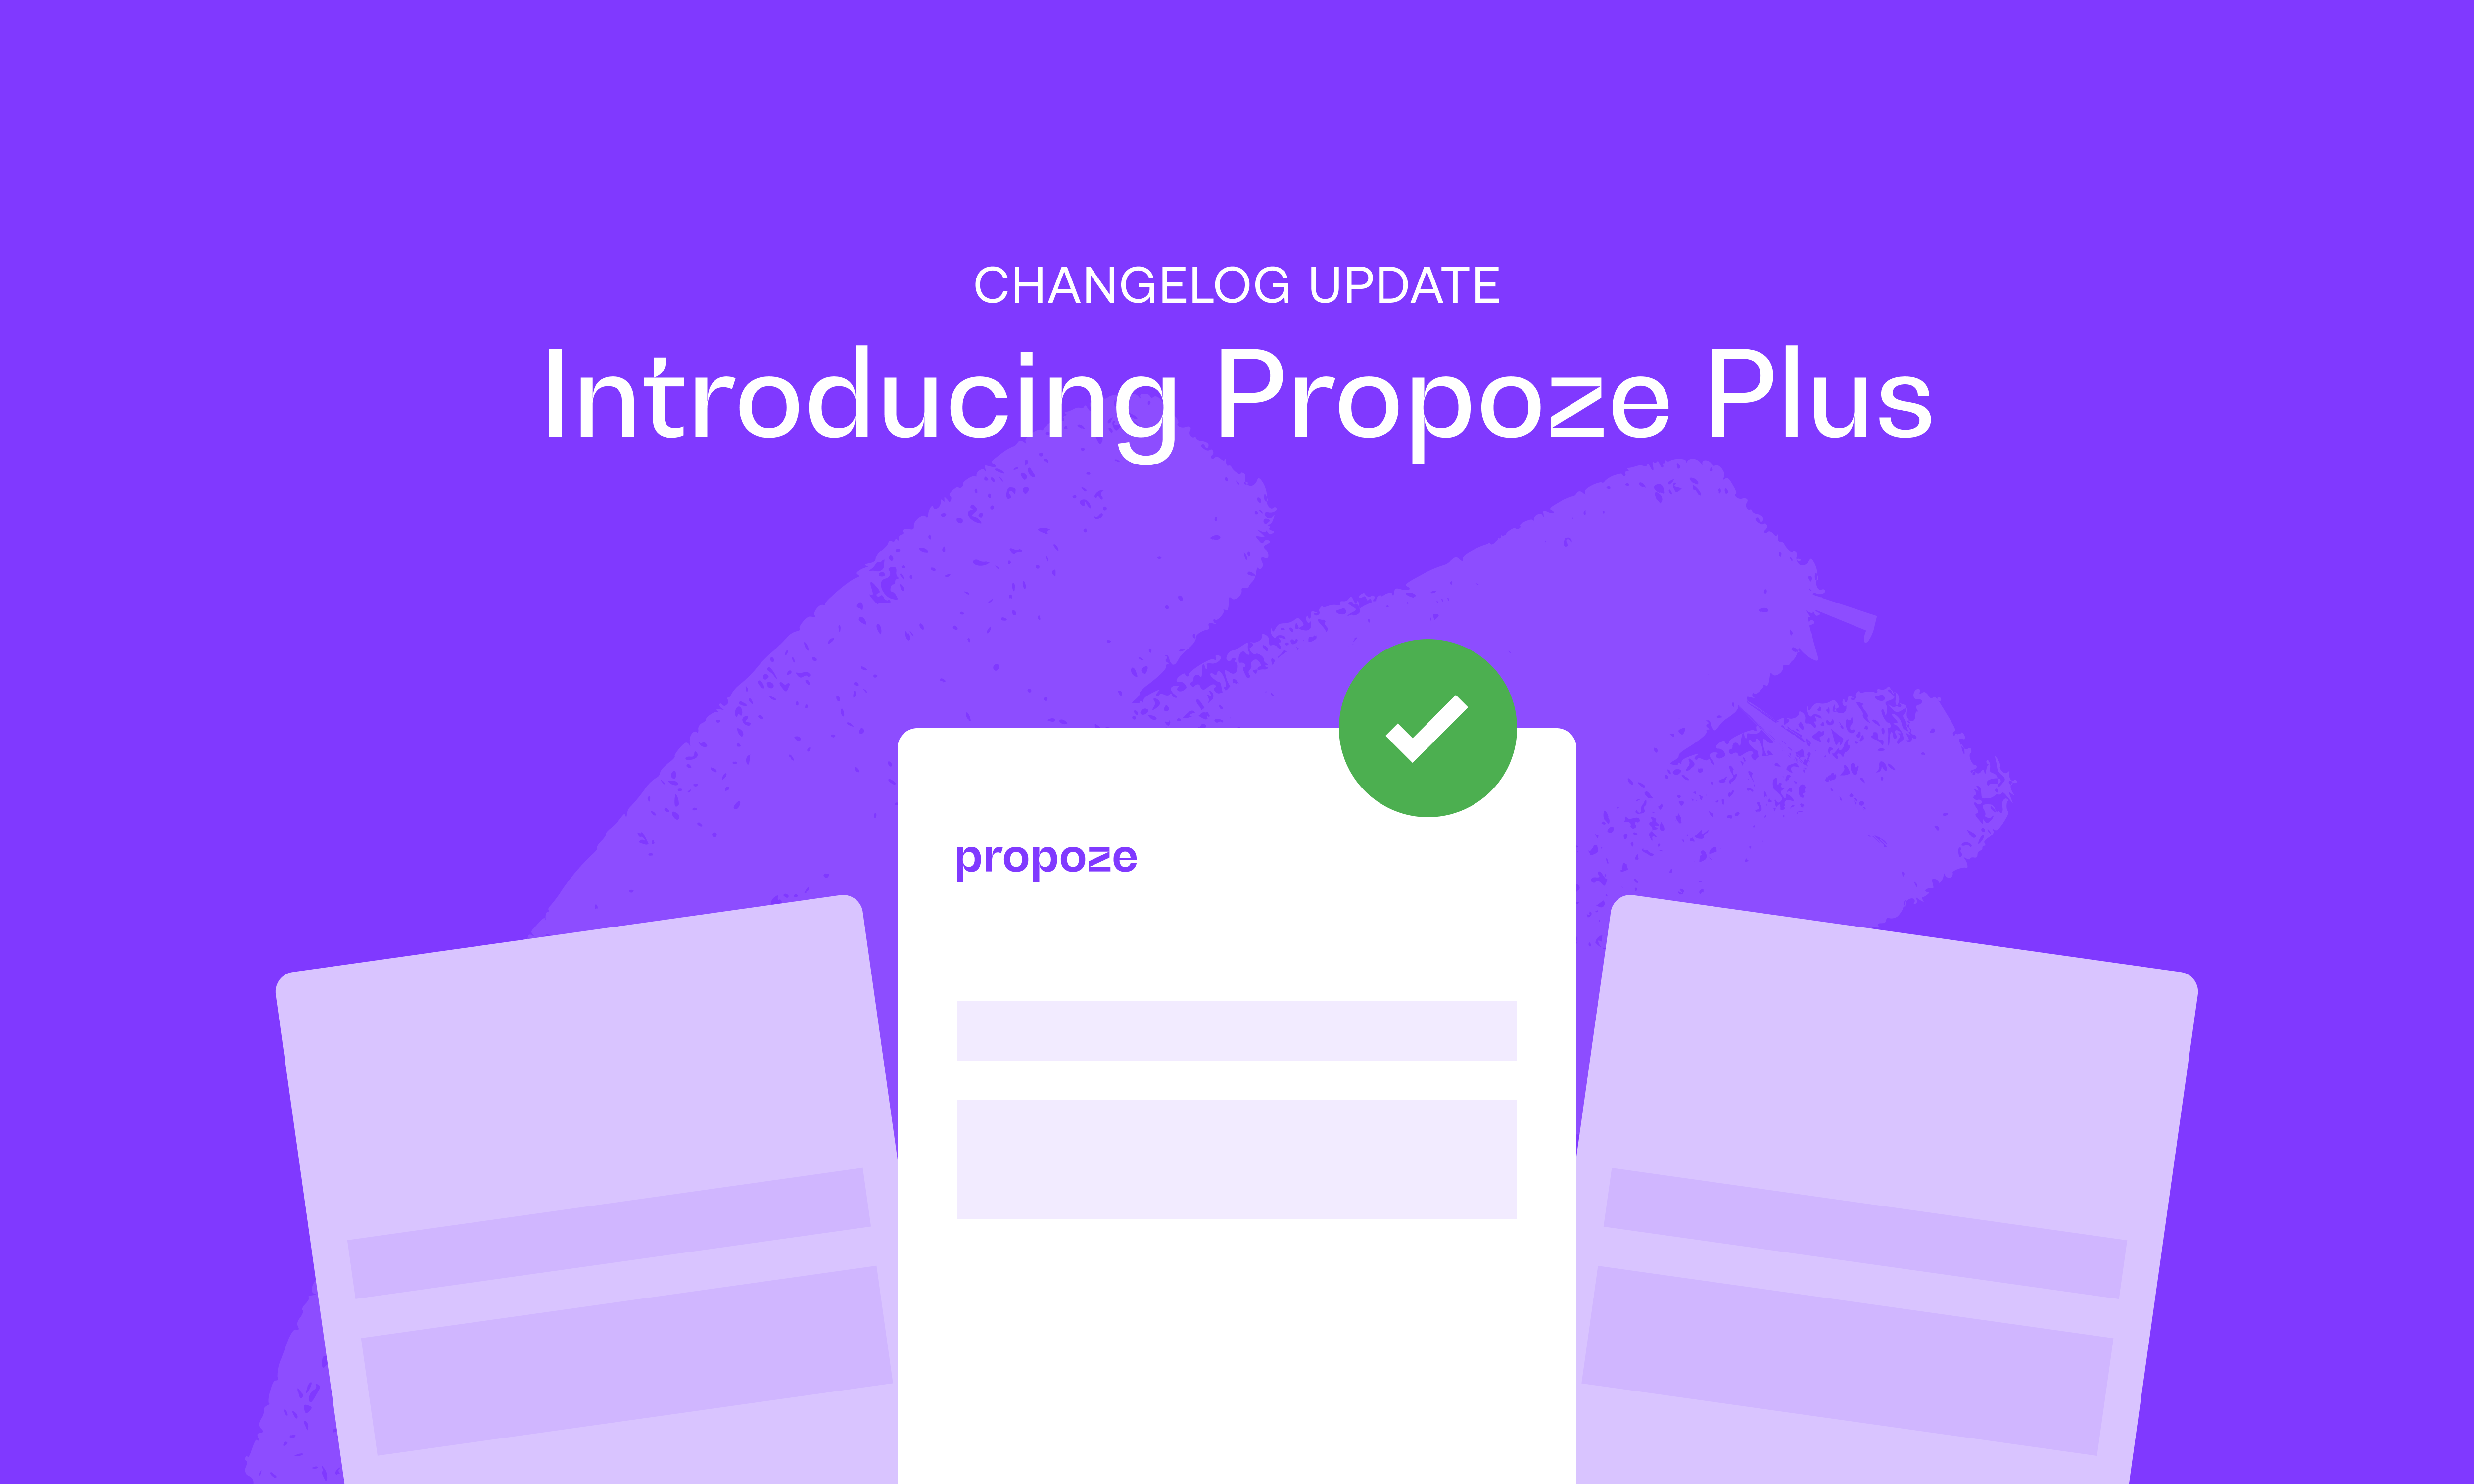 A changelog update for Propoze, uncovering Propoze Plus